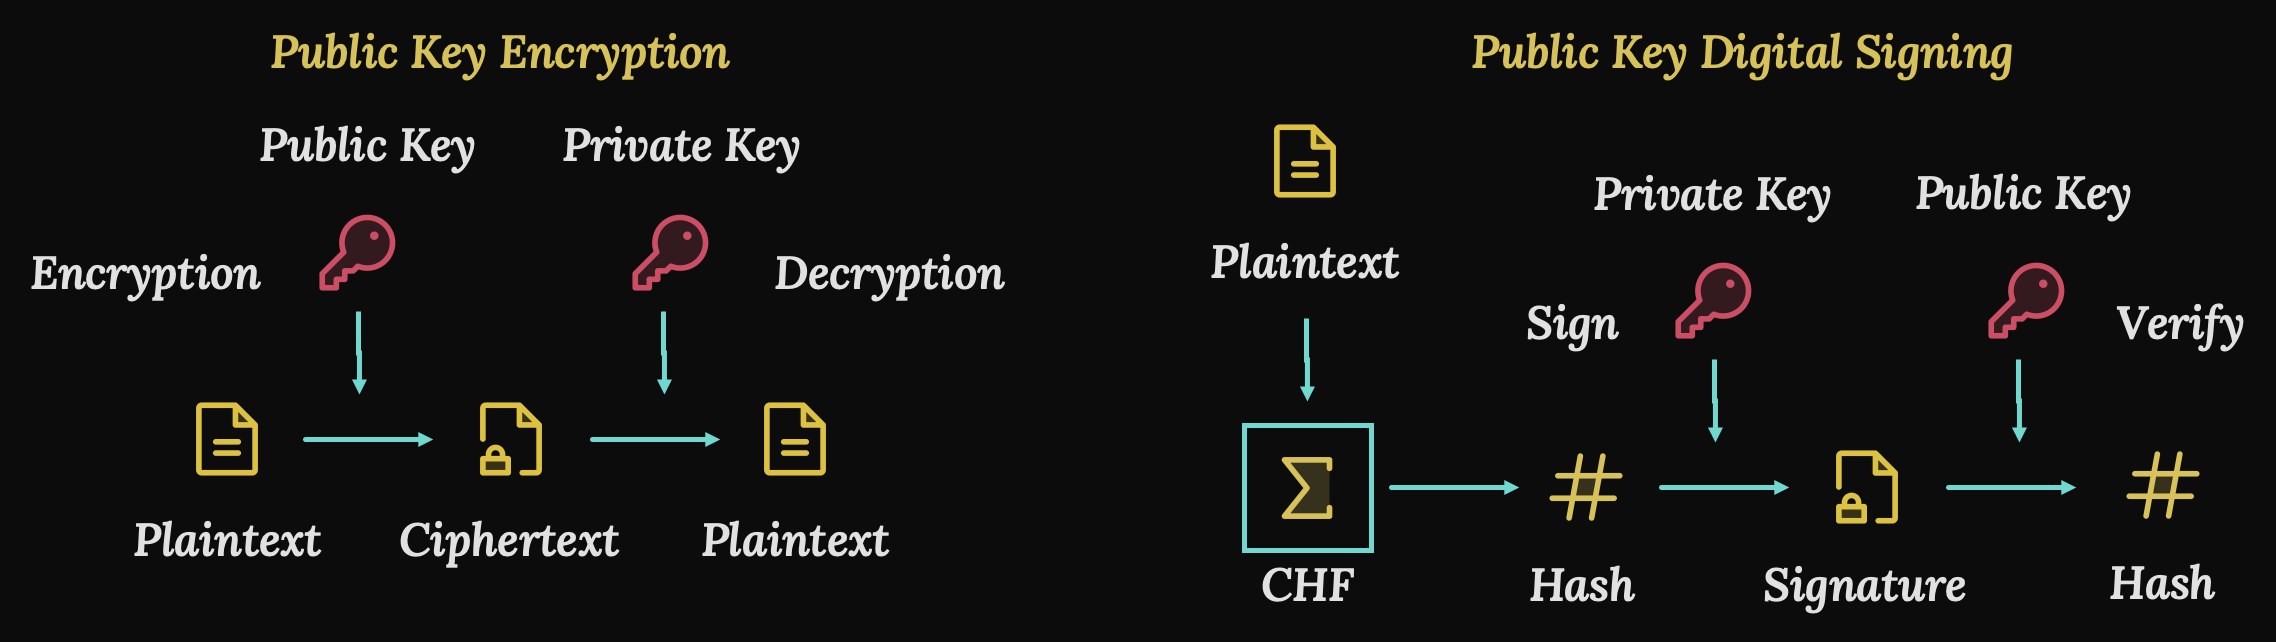 A comparison between public key encryption and digital signatures